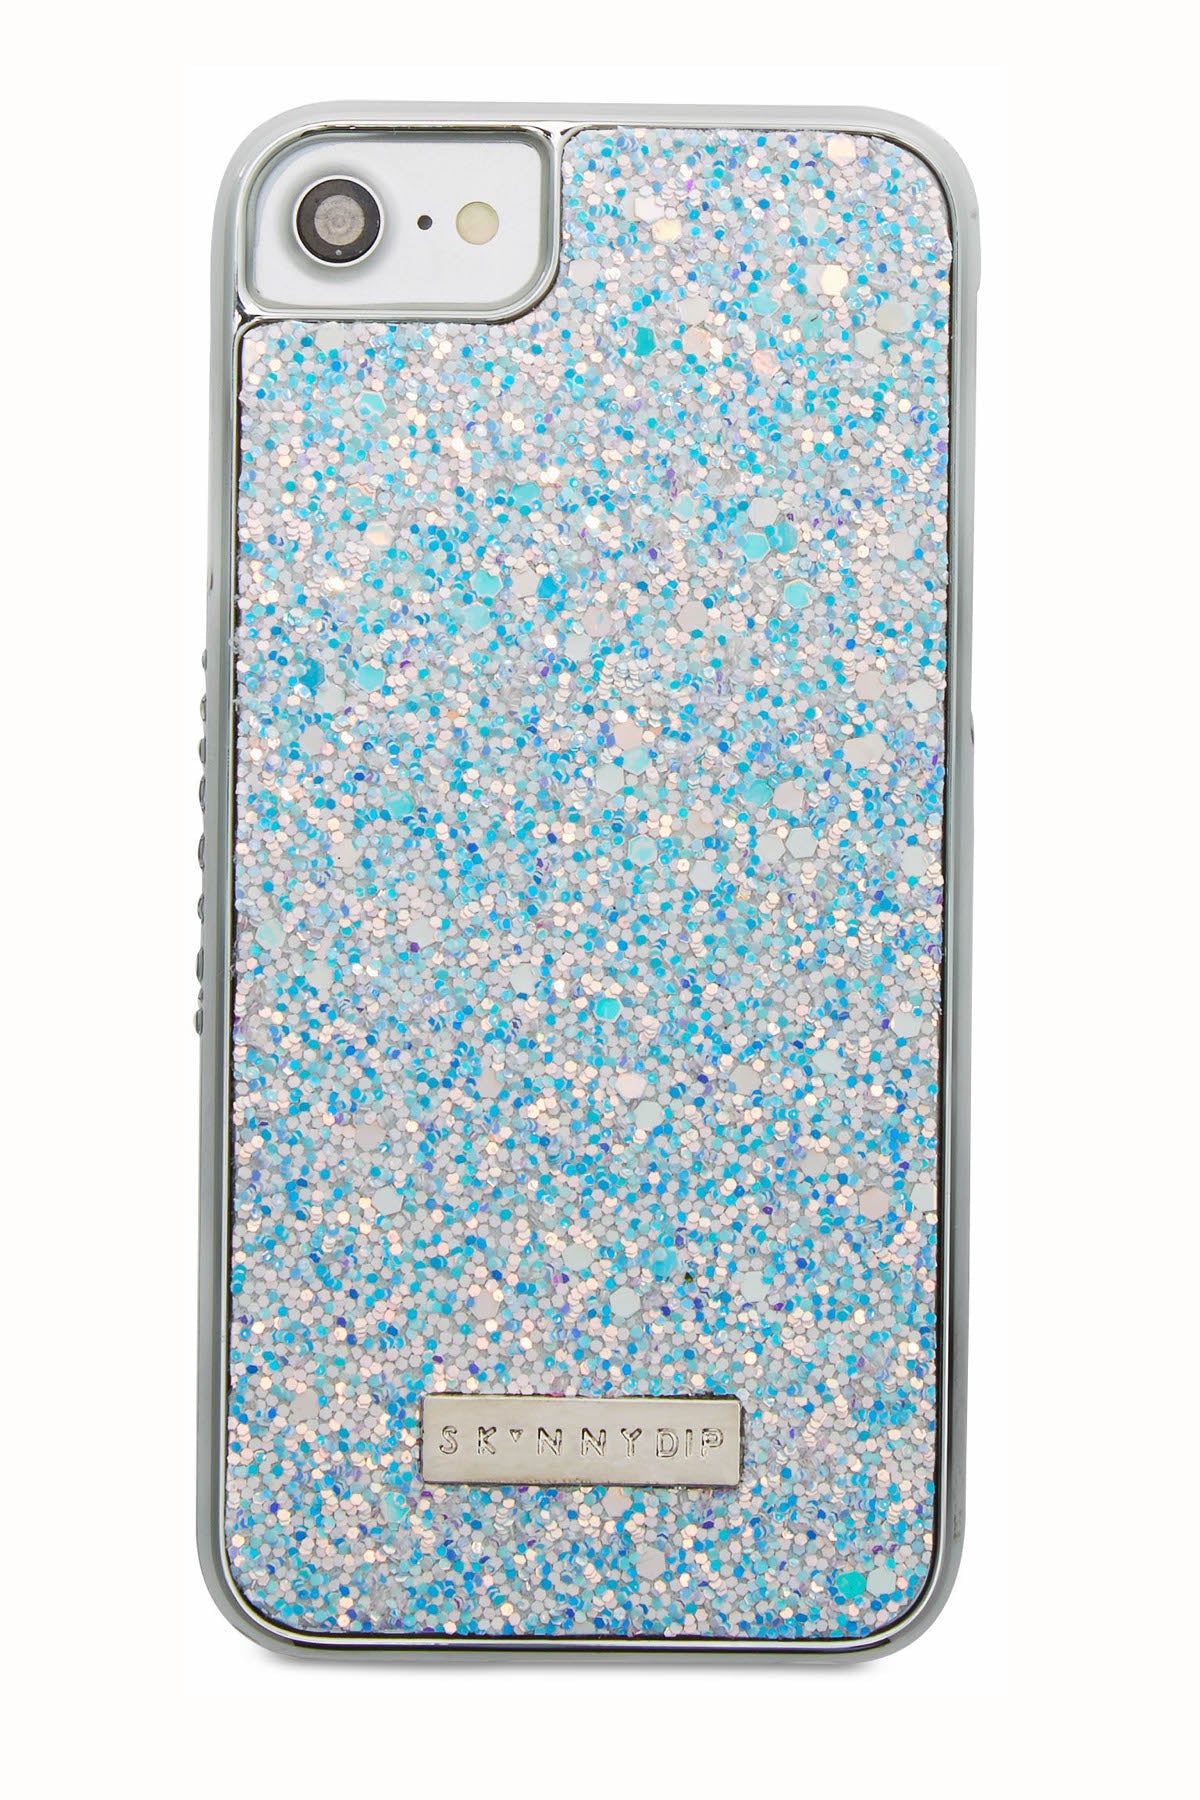 Skinnydip London Frozen Glitter iPhone Case & Screen Protector